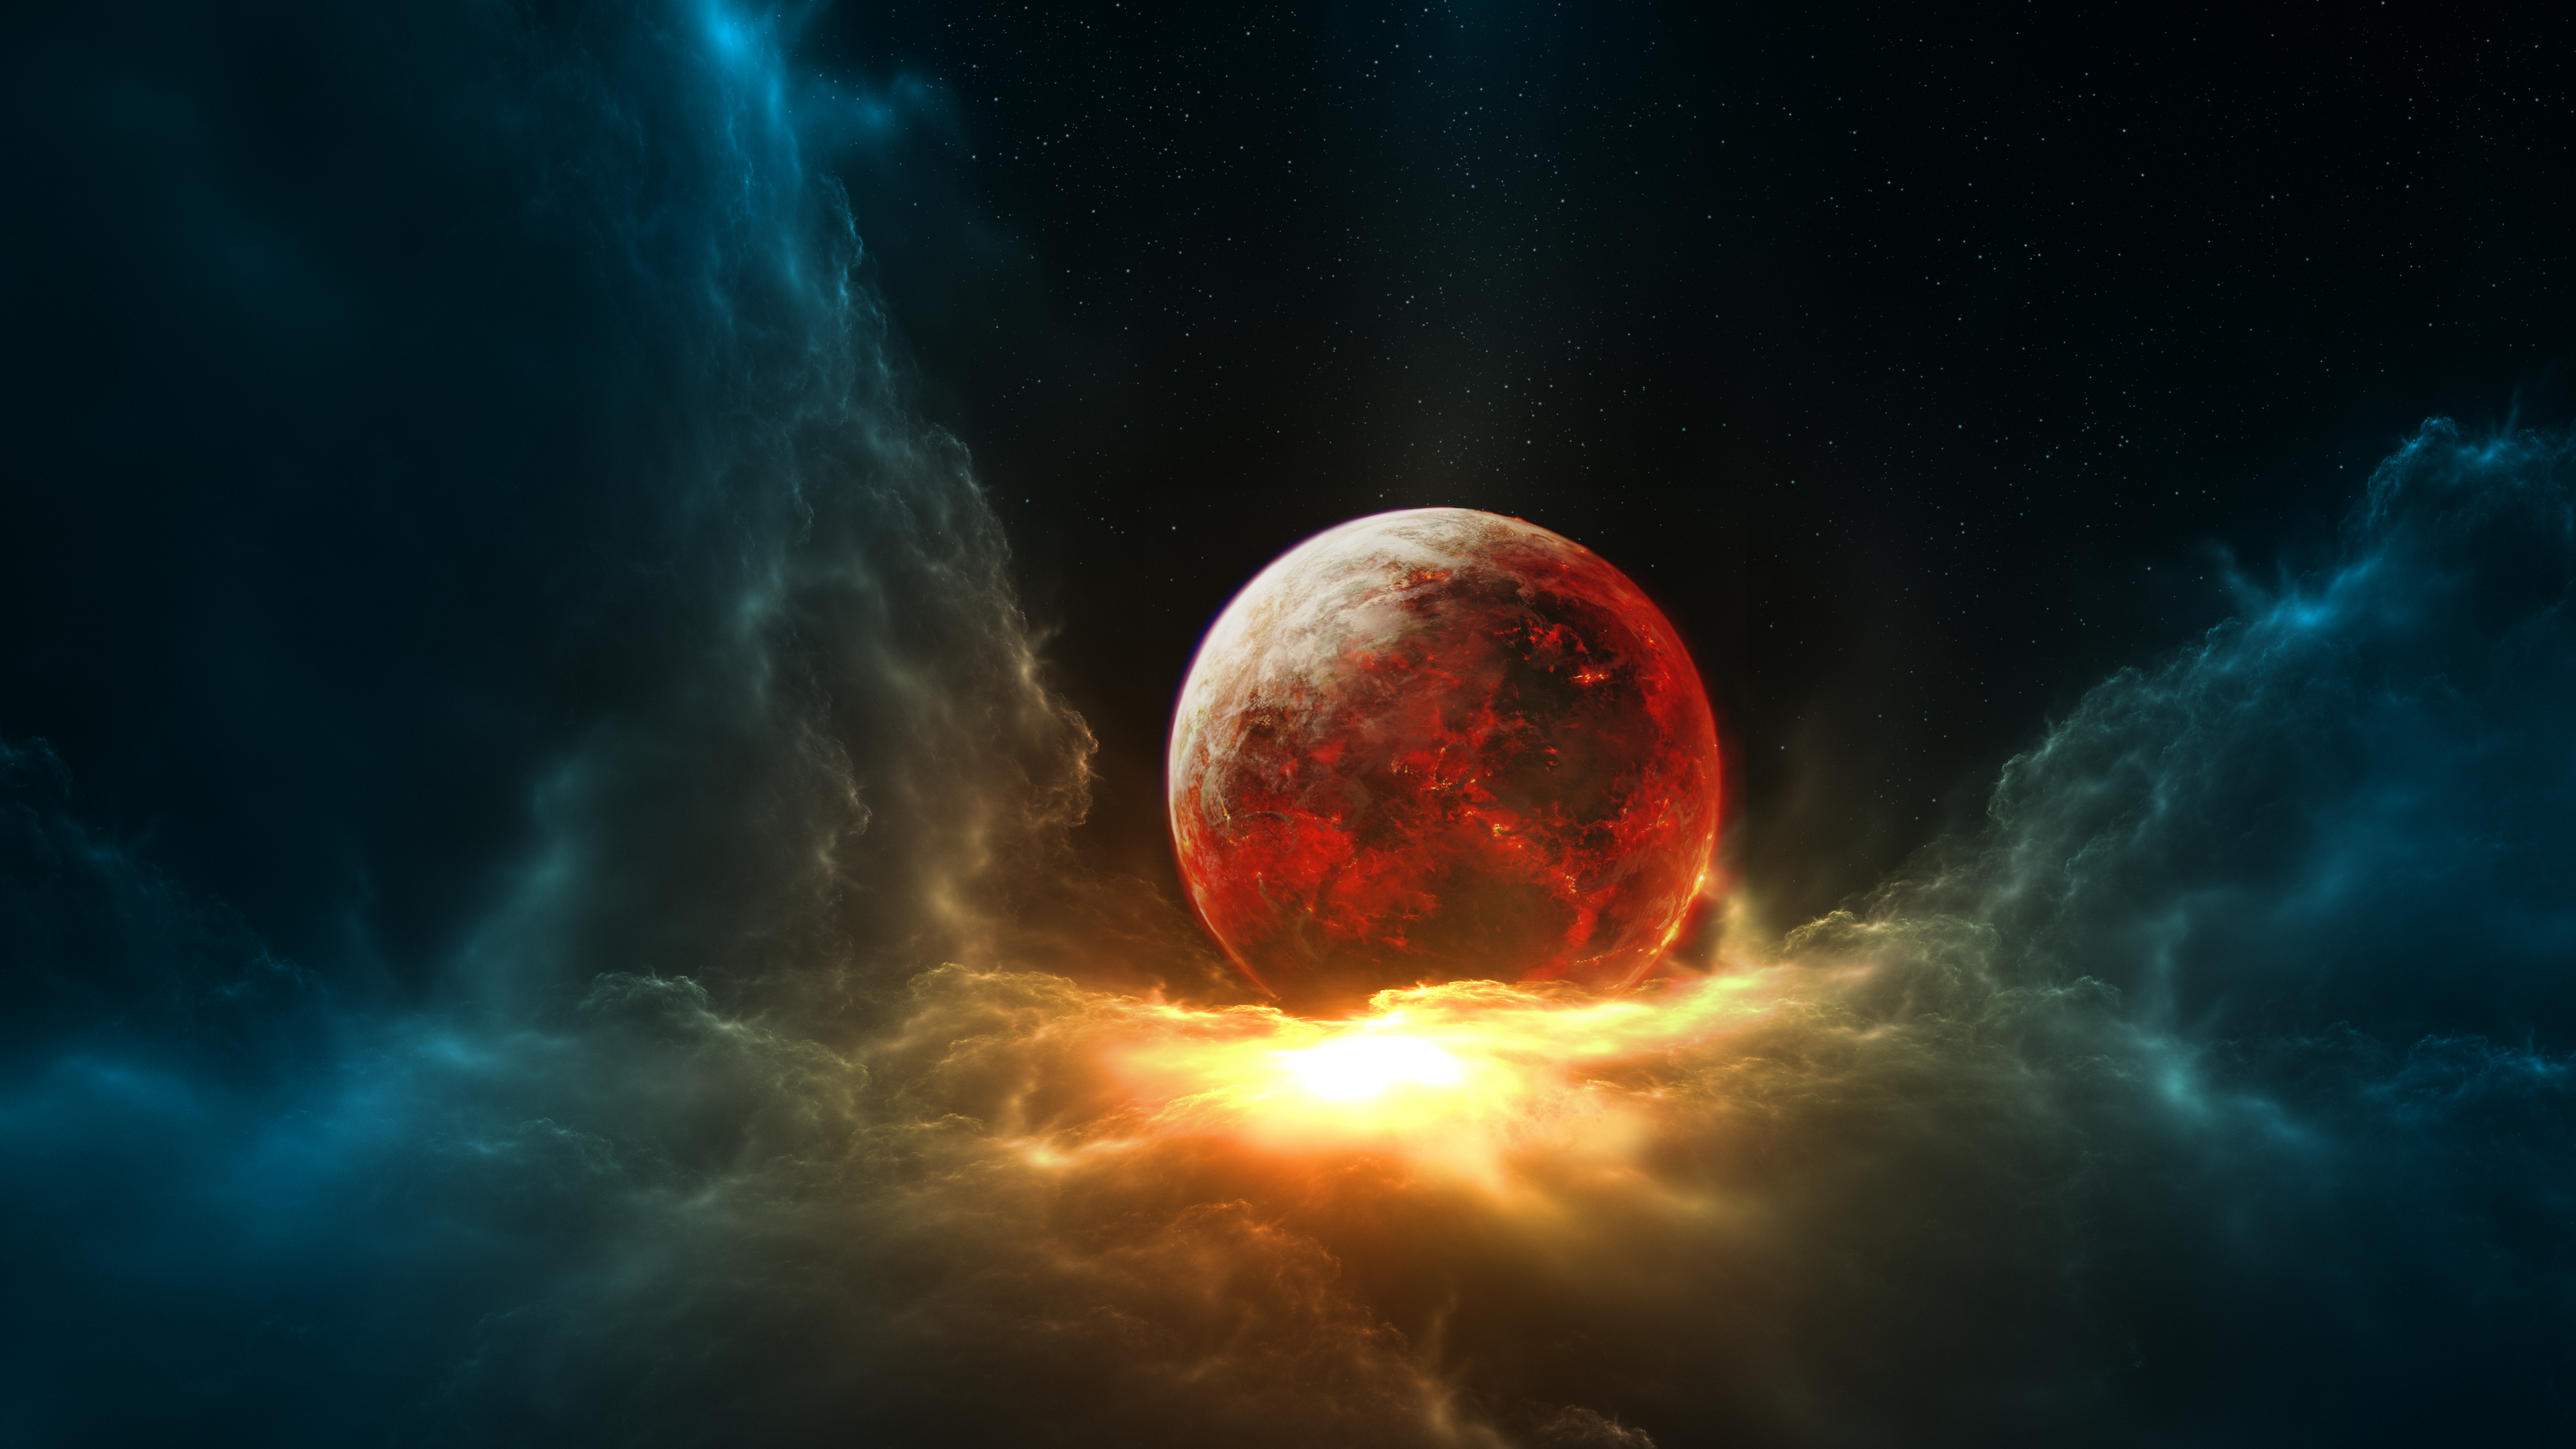 Hypnoshot Digital Digital Art Artwork Render Space Art Planet Galaxy Nebula Stars 3840x2160